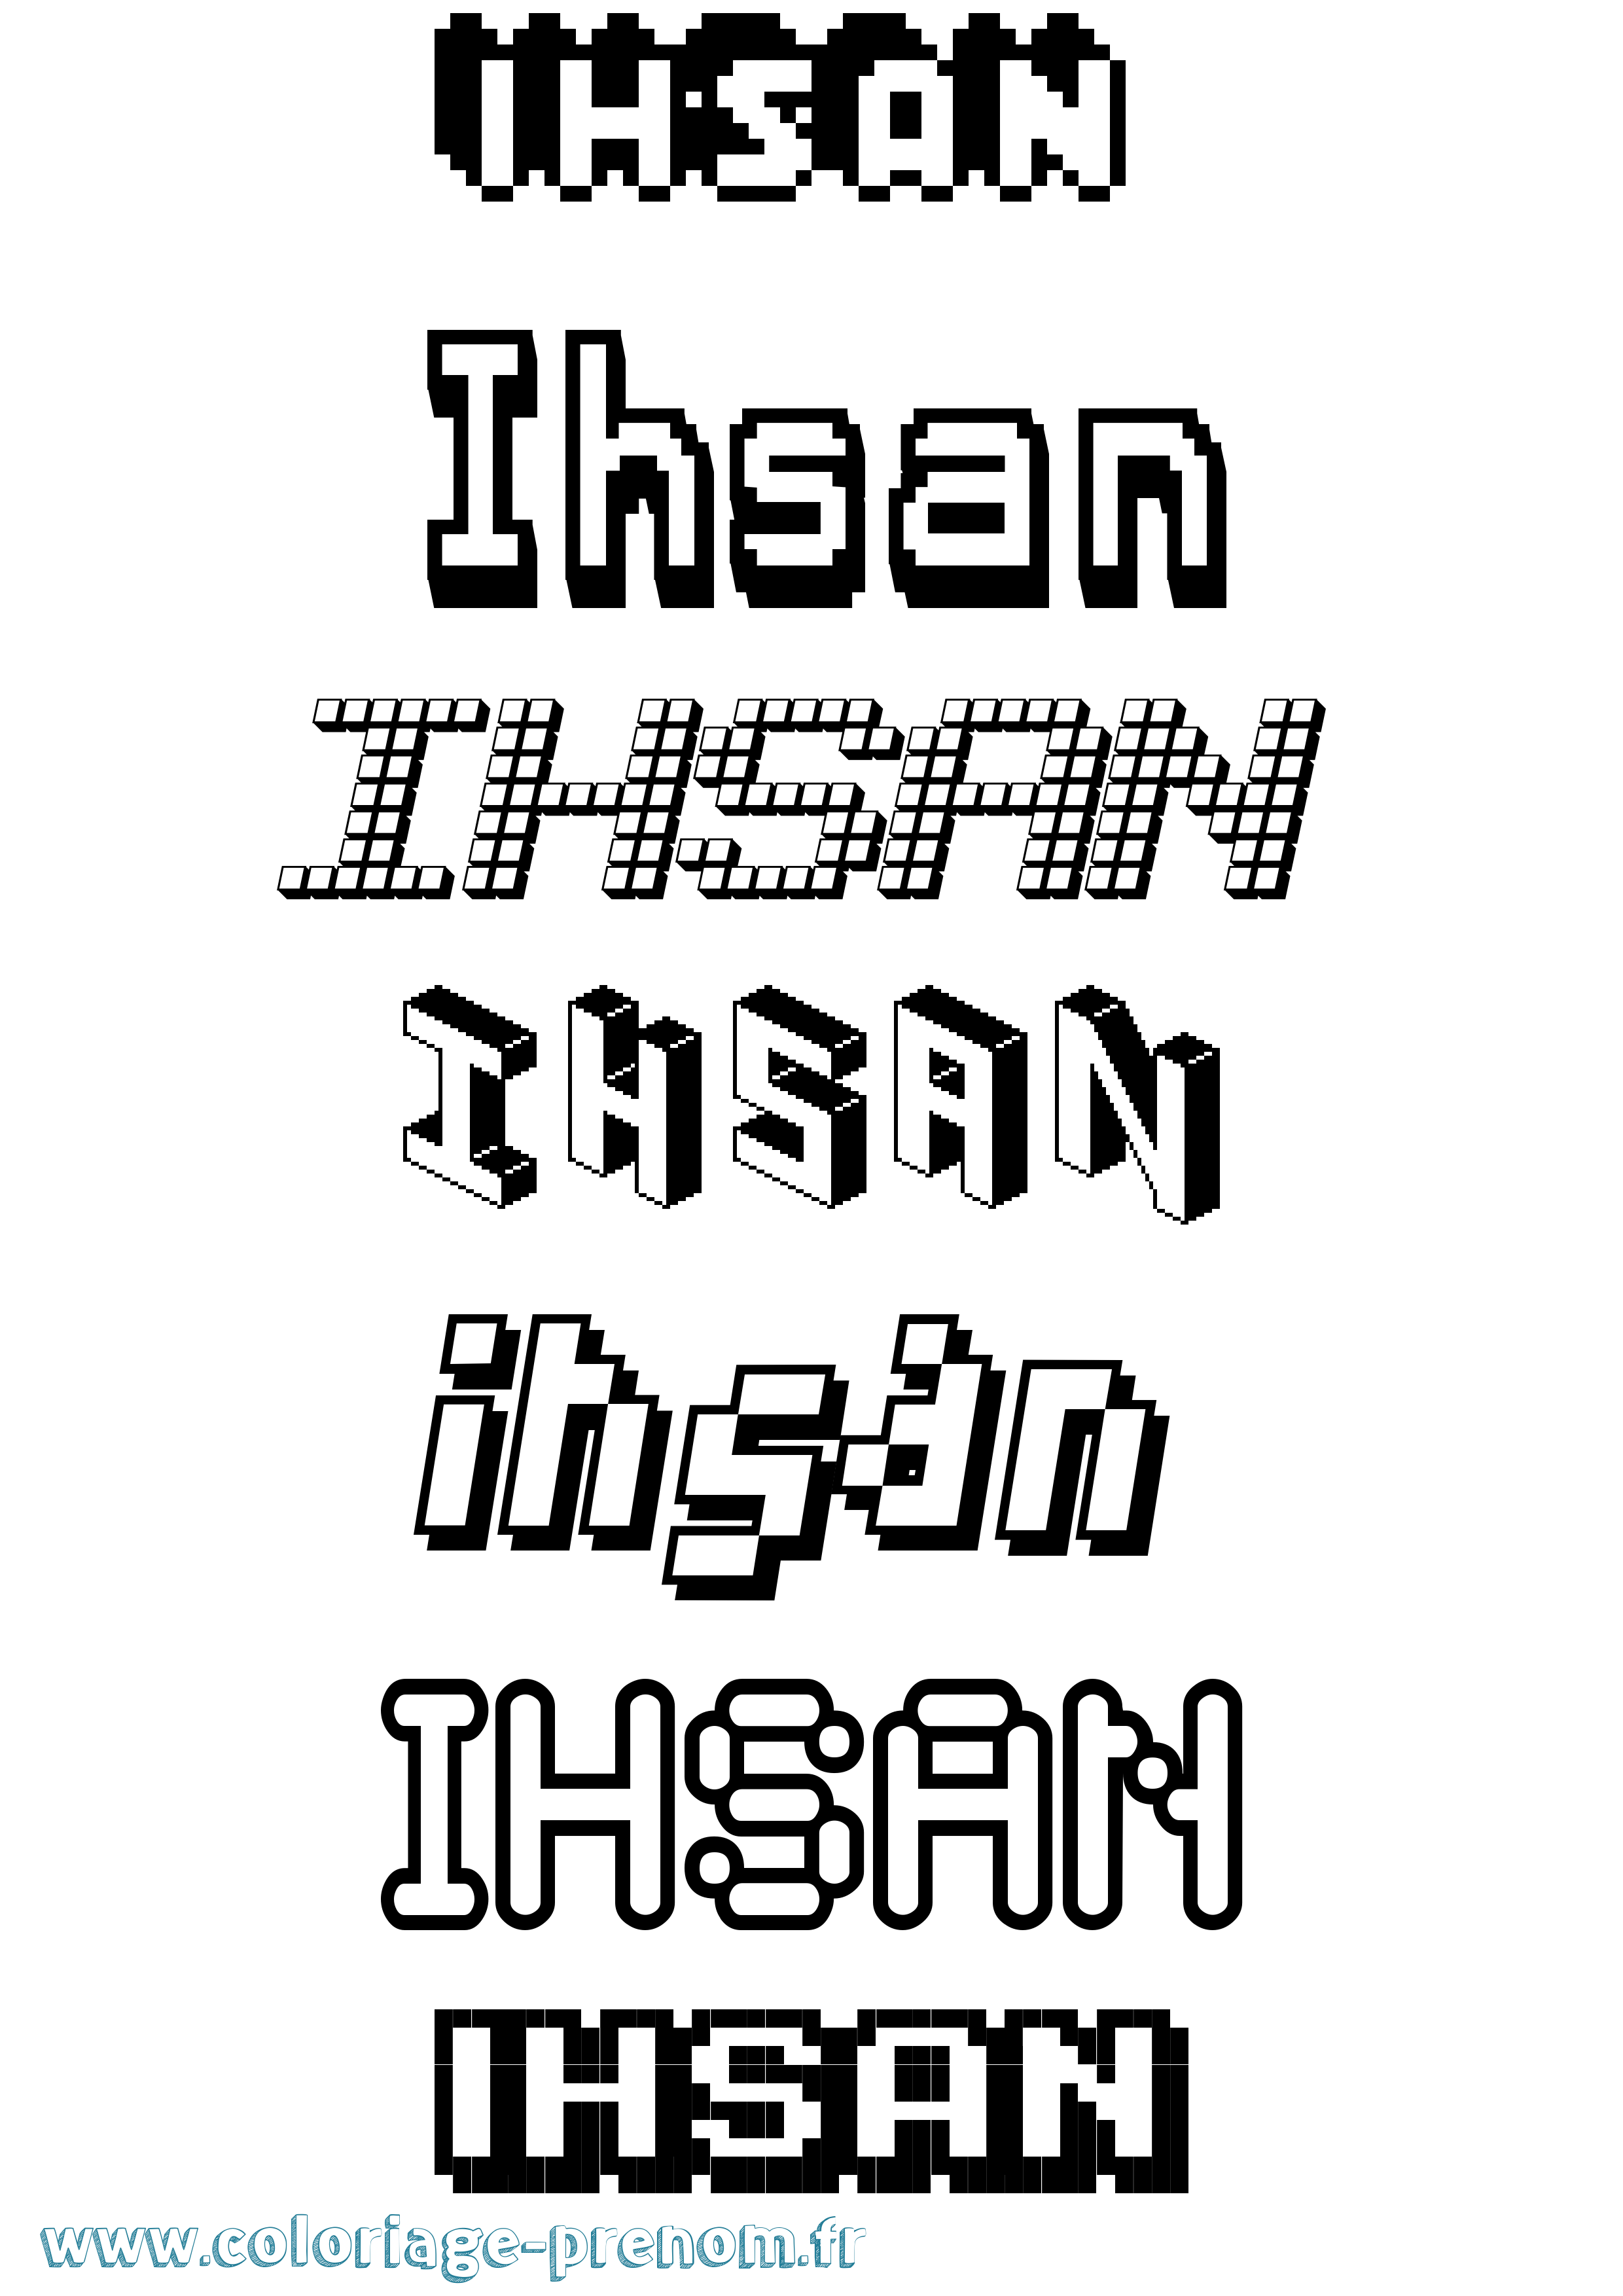 Coloriage prénom Ihsan Pixel